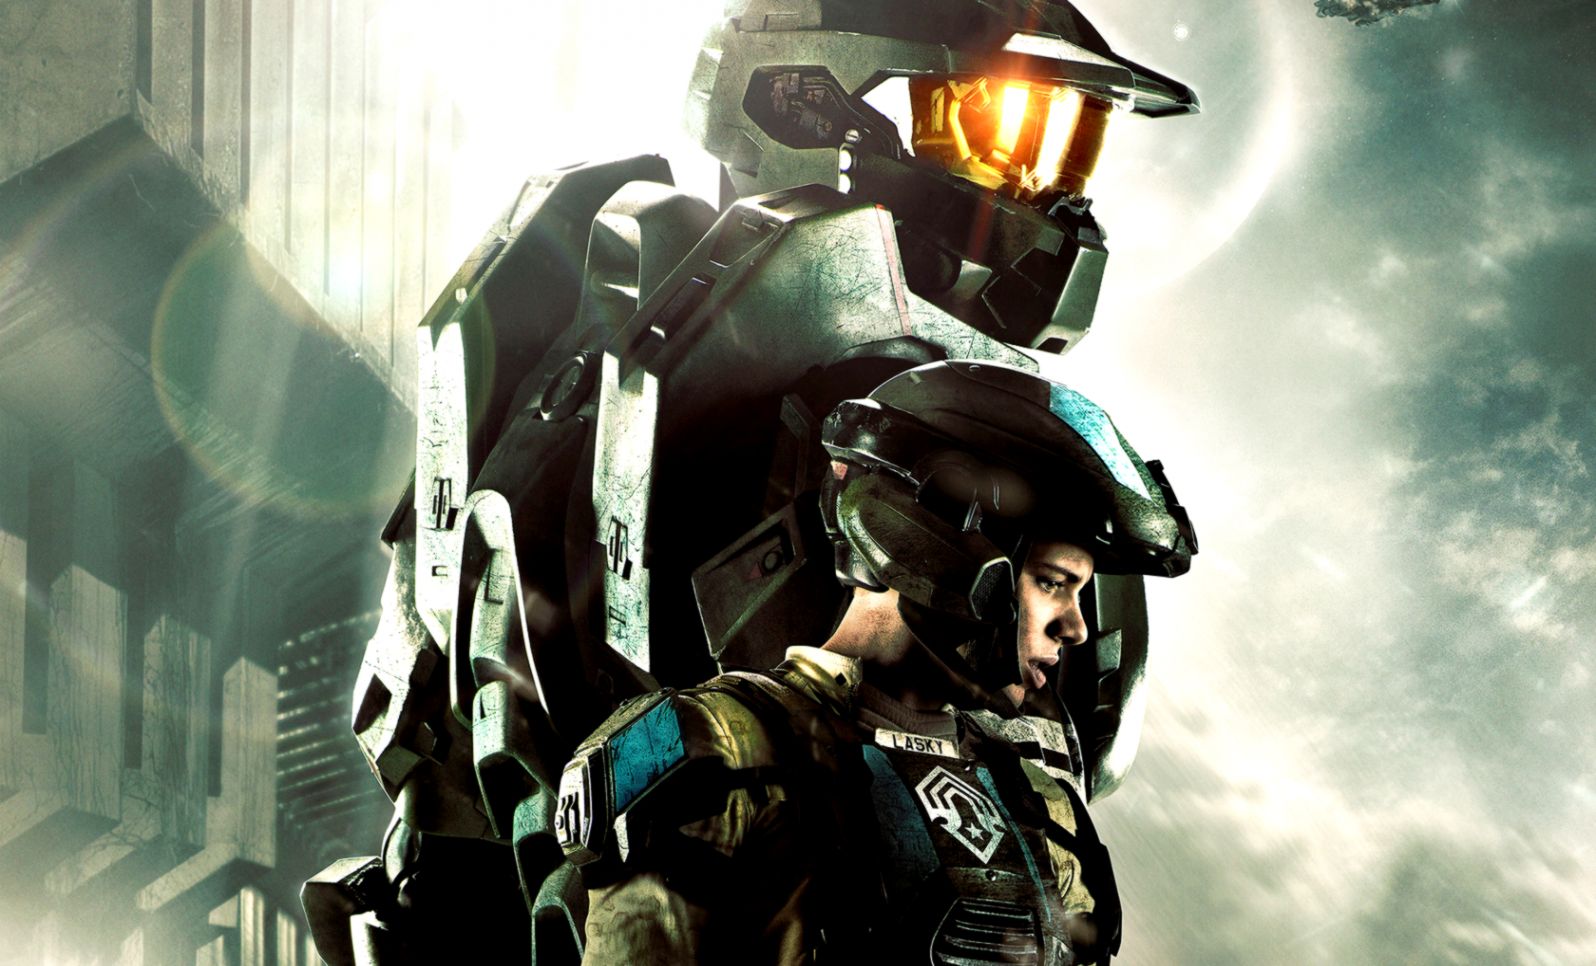 Halo 4 Imminent Please Watch The Following Before Proceeding - Halo 4 Forward Unto Dawn - HD Wallpaper 